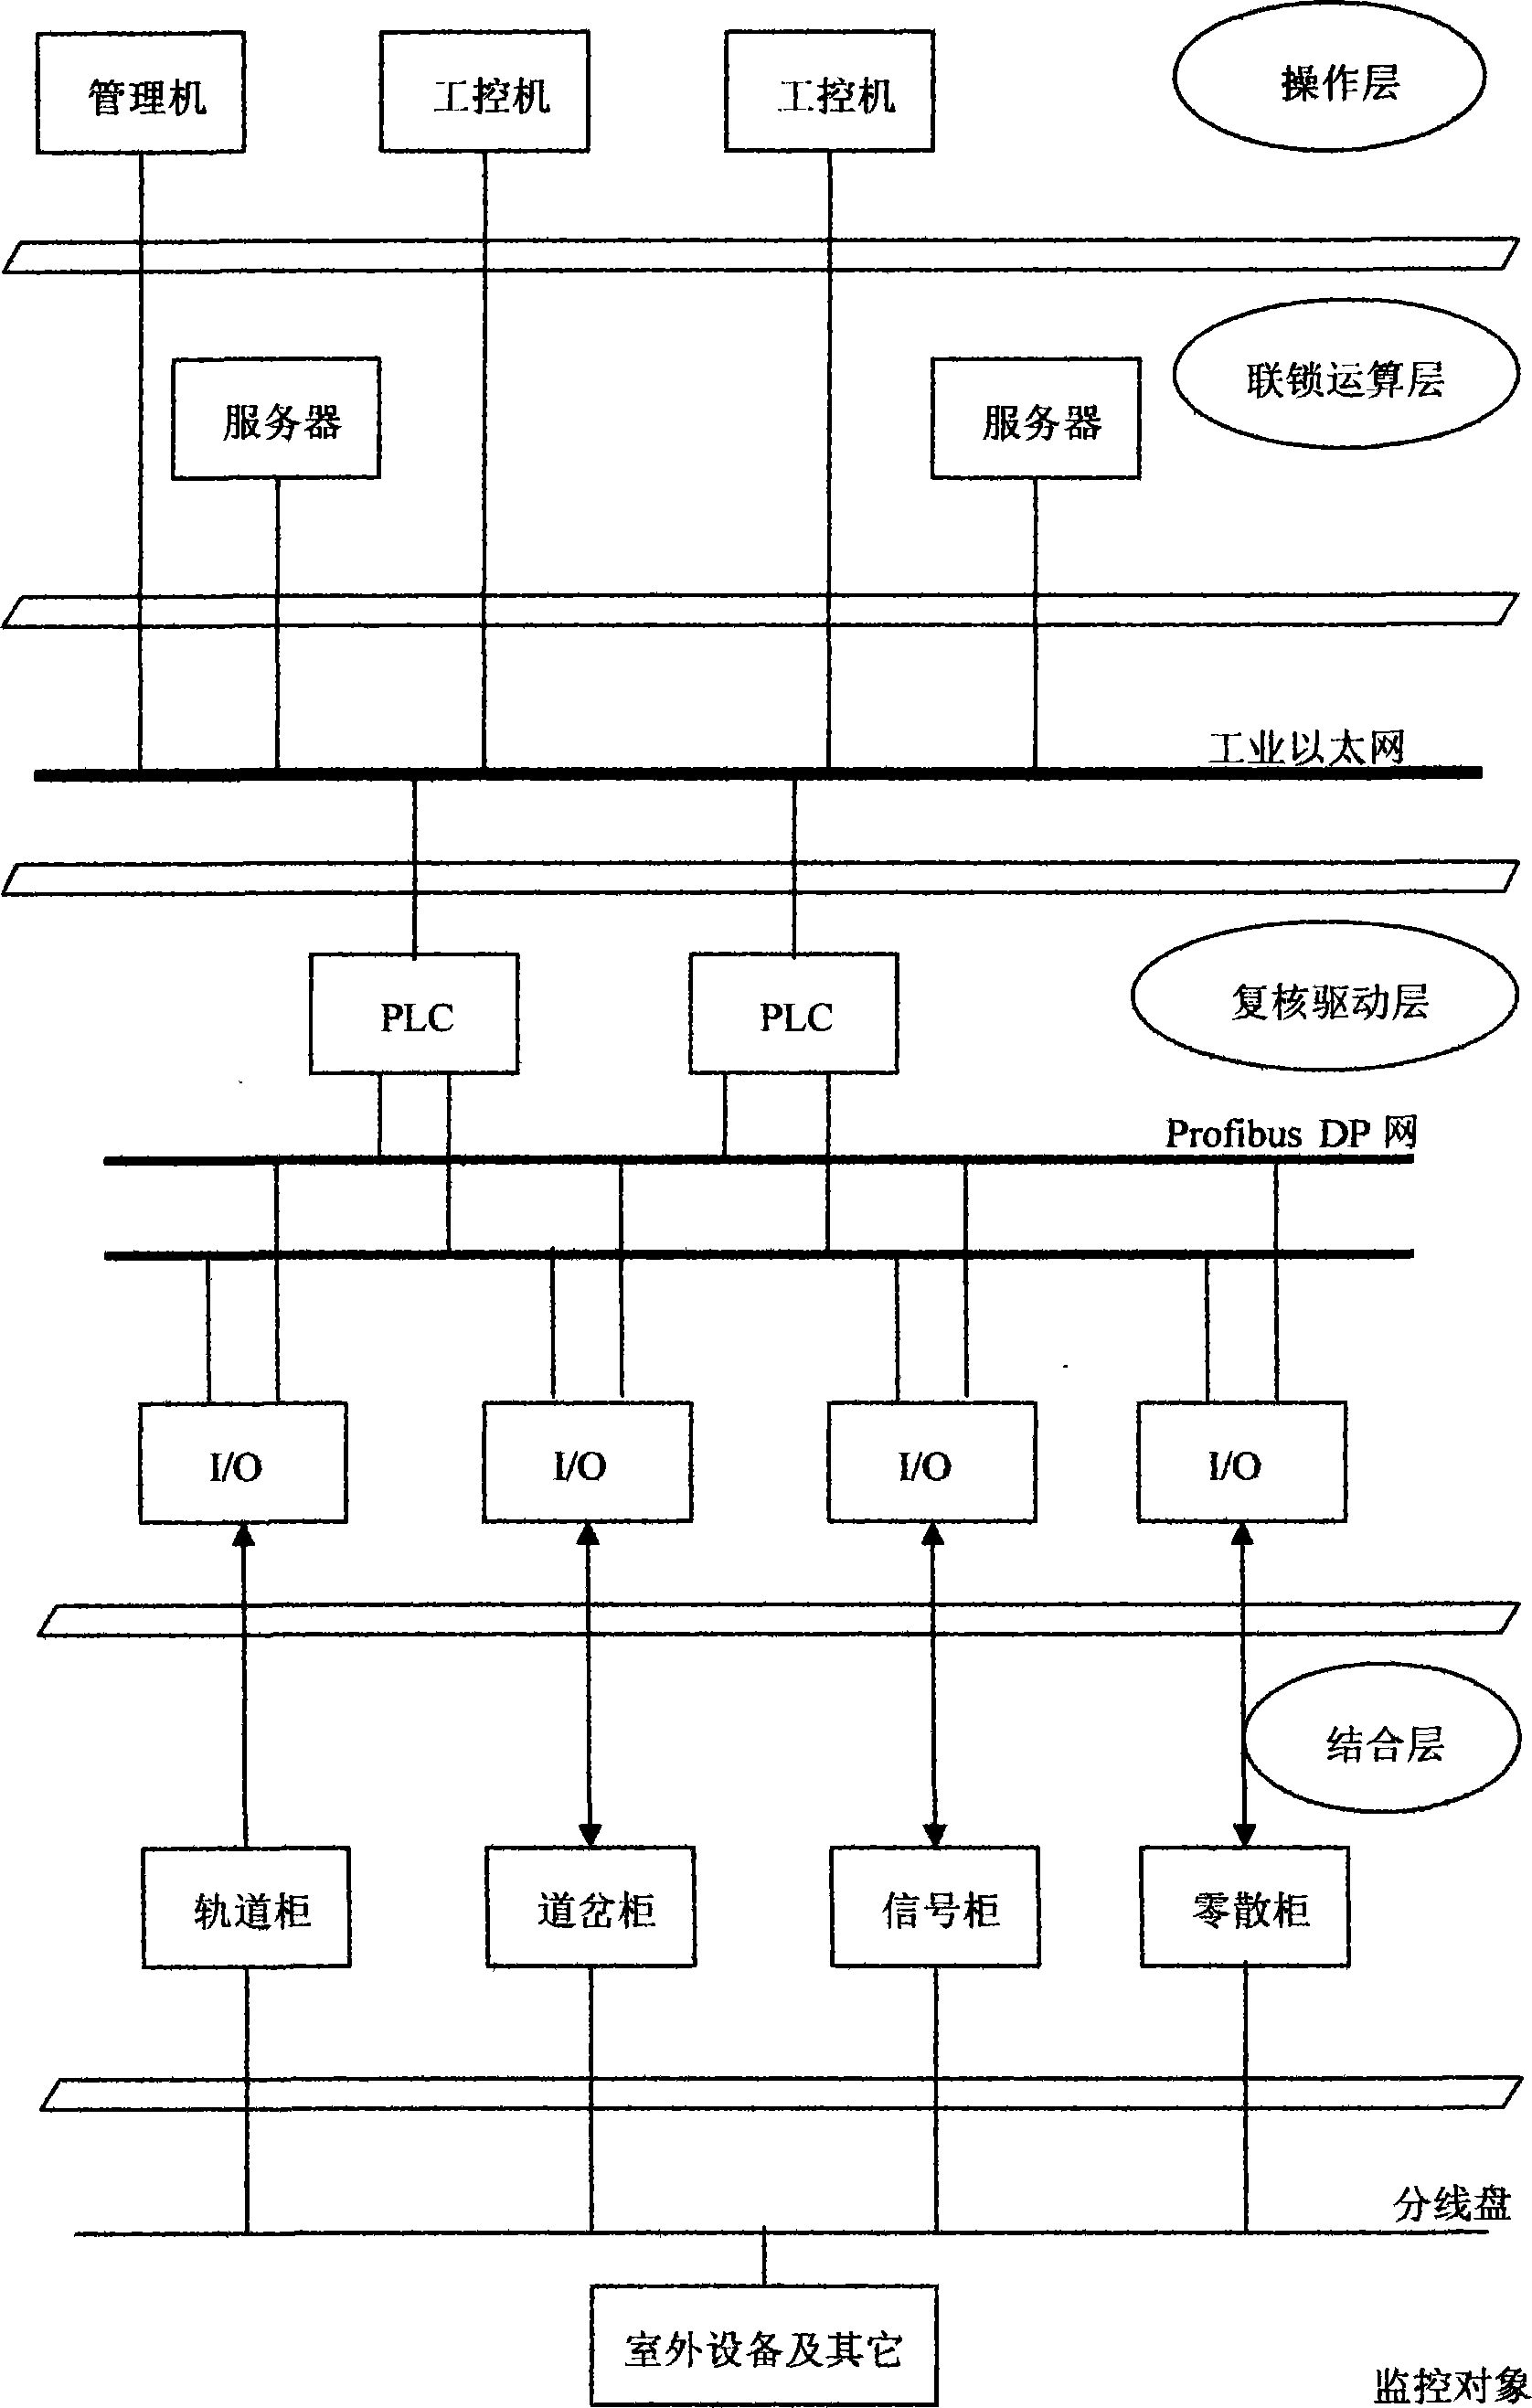 Railway signal microcomputer interlock system